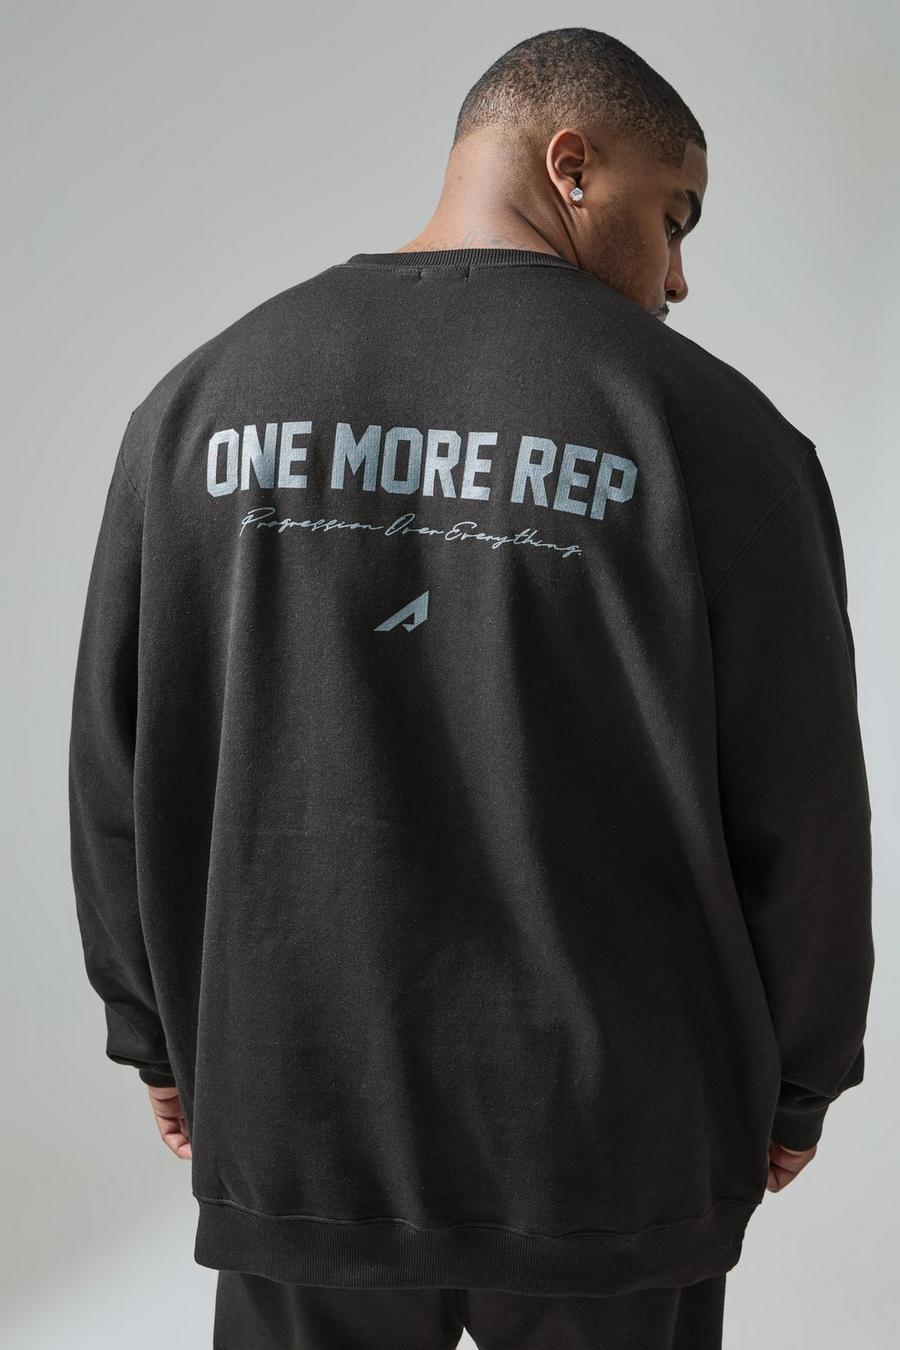 Plus Active Oversize One More Rep Sweatshirt, Black